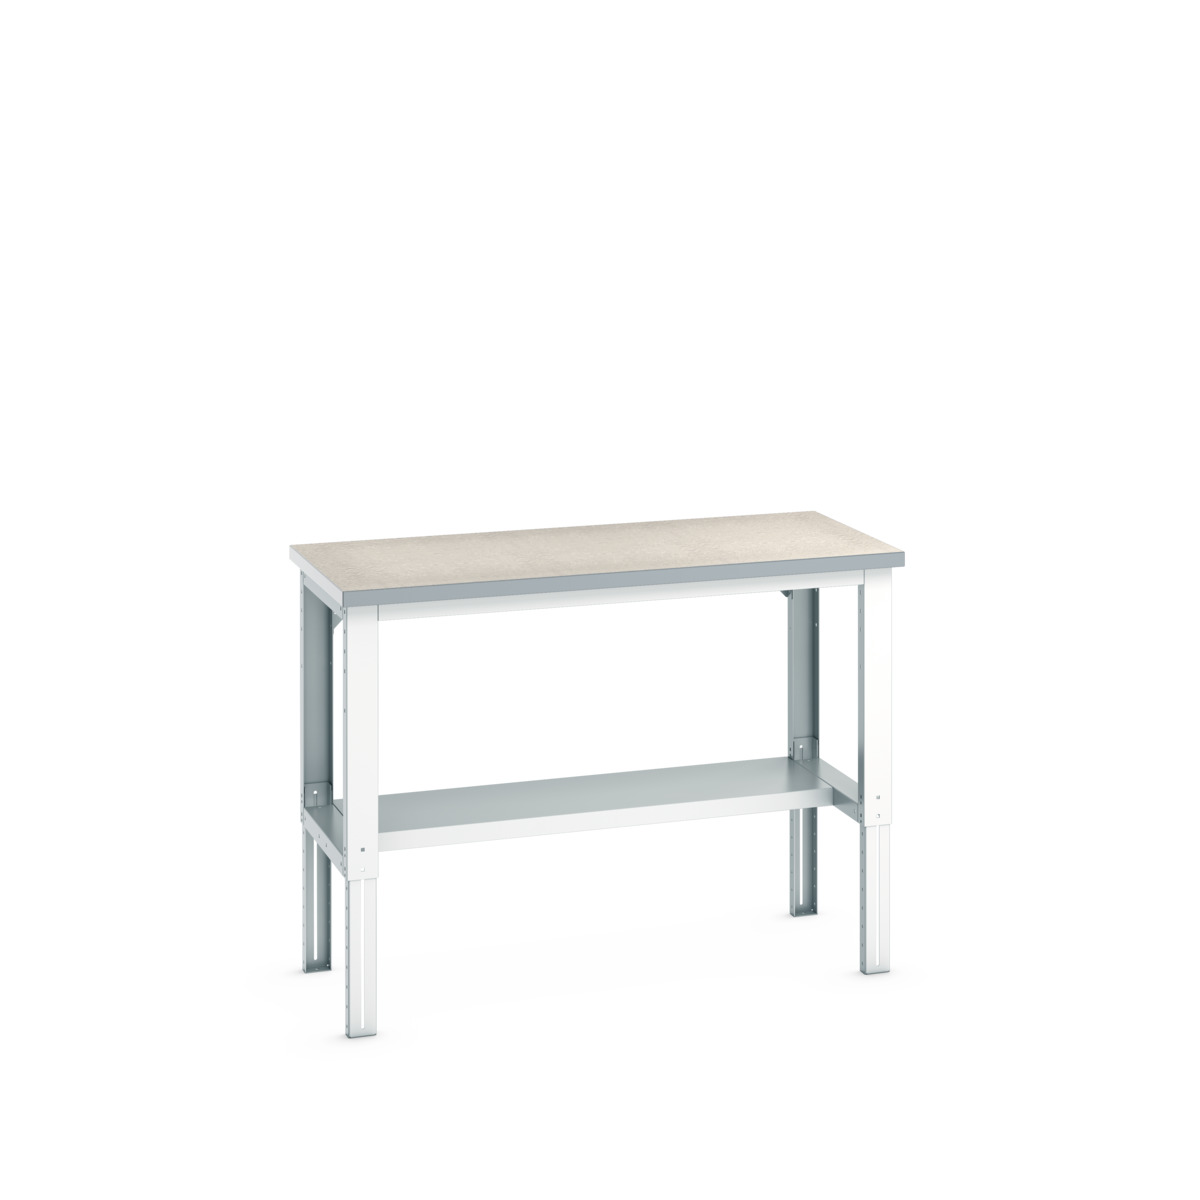 41003123.16V - cubio framework bench adj height (lino)